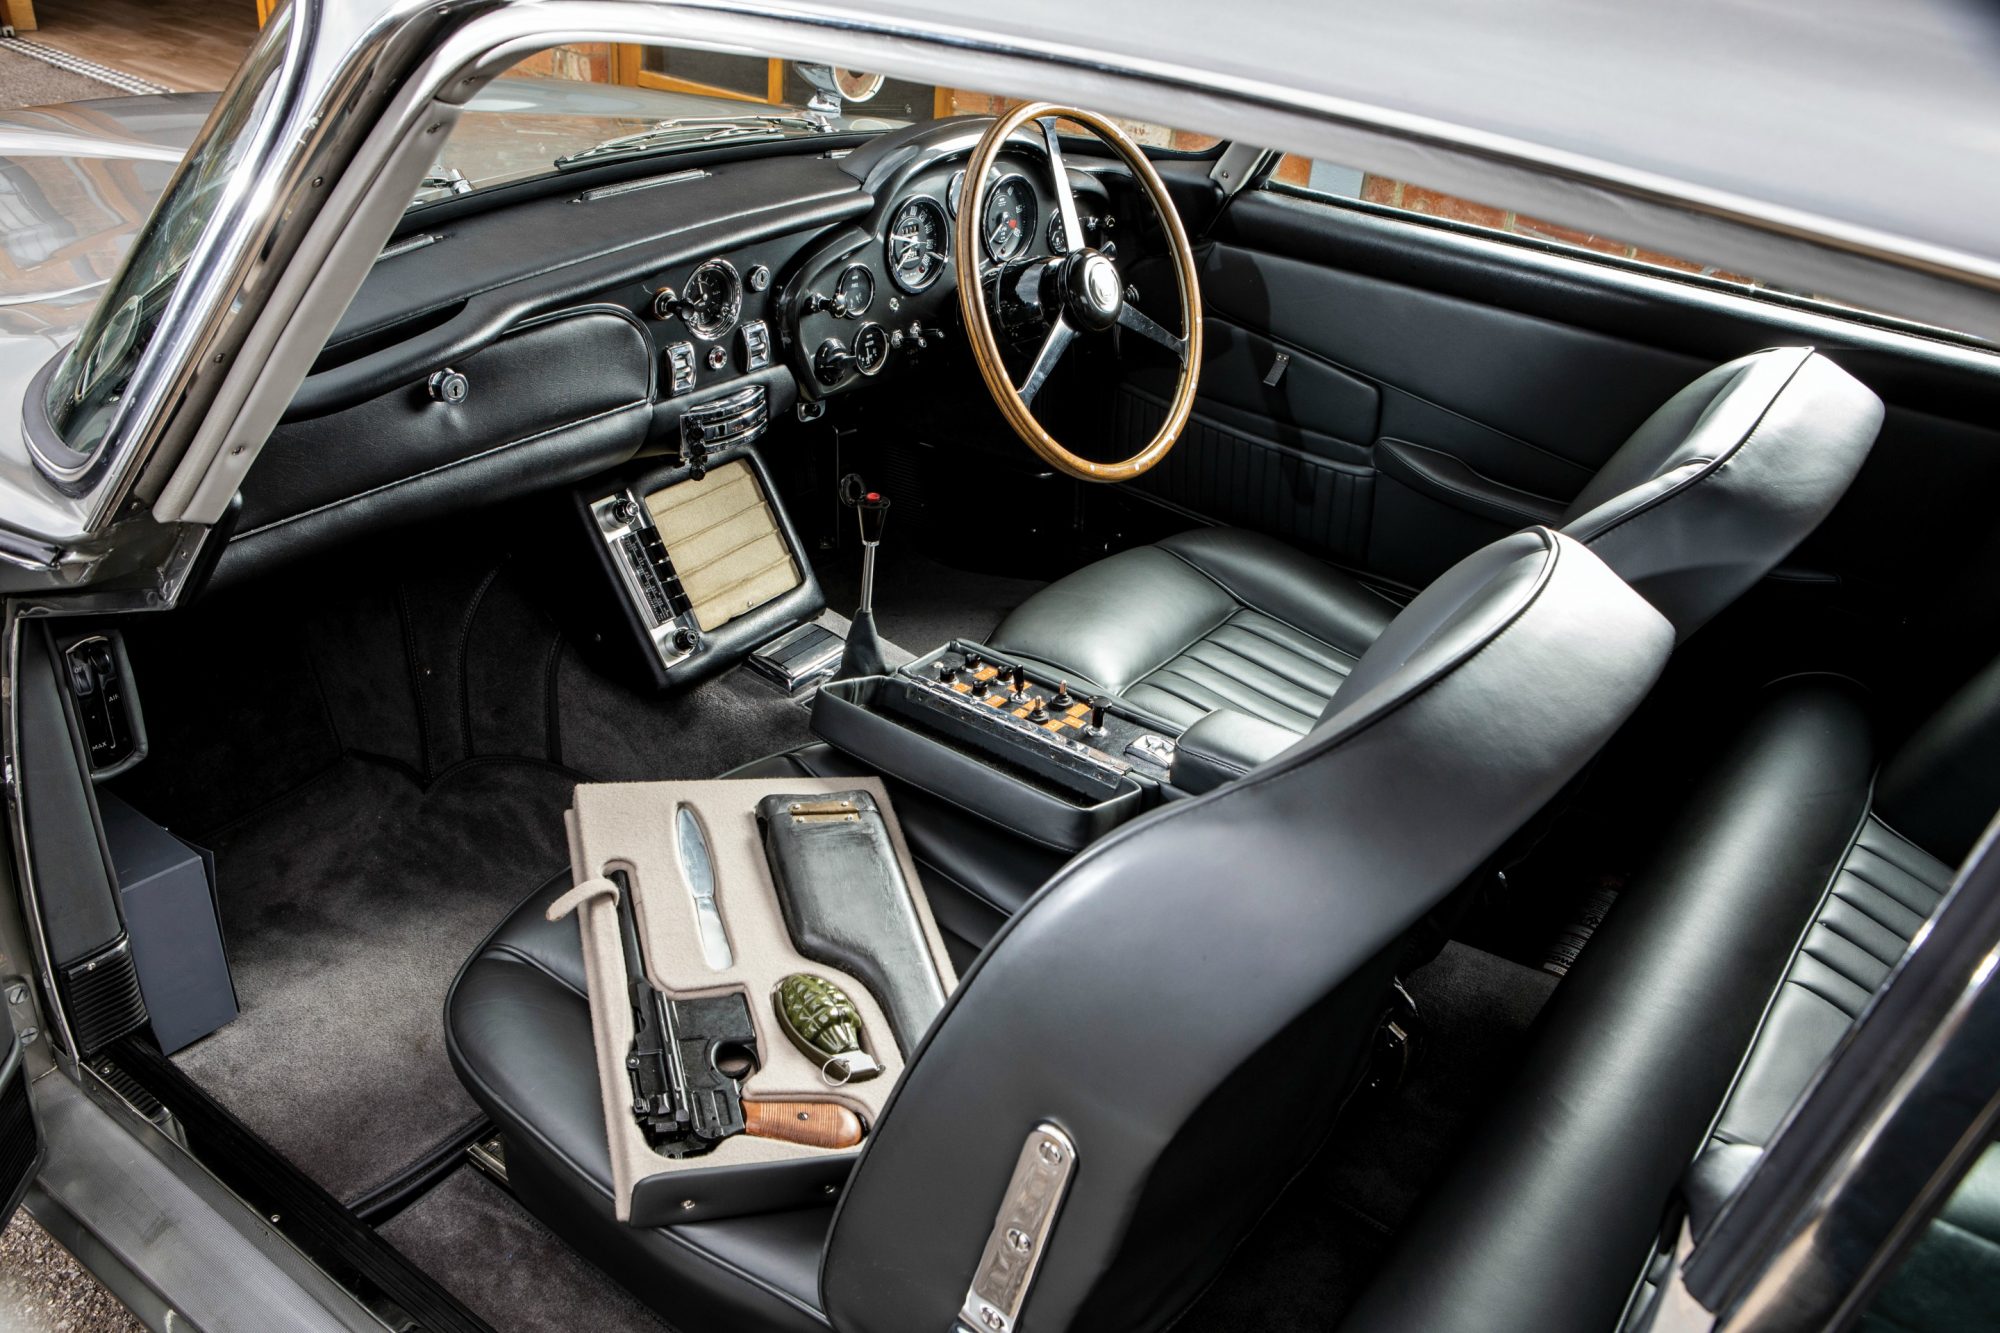 James Bond 007 "Thunderball" Aston Martin DB5